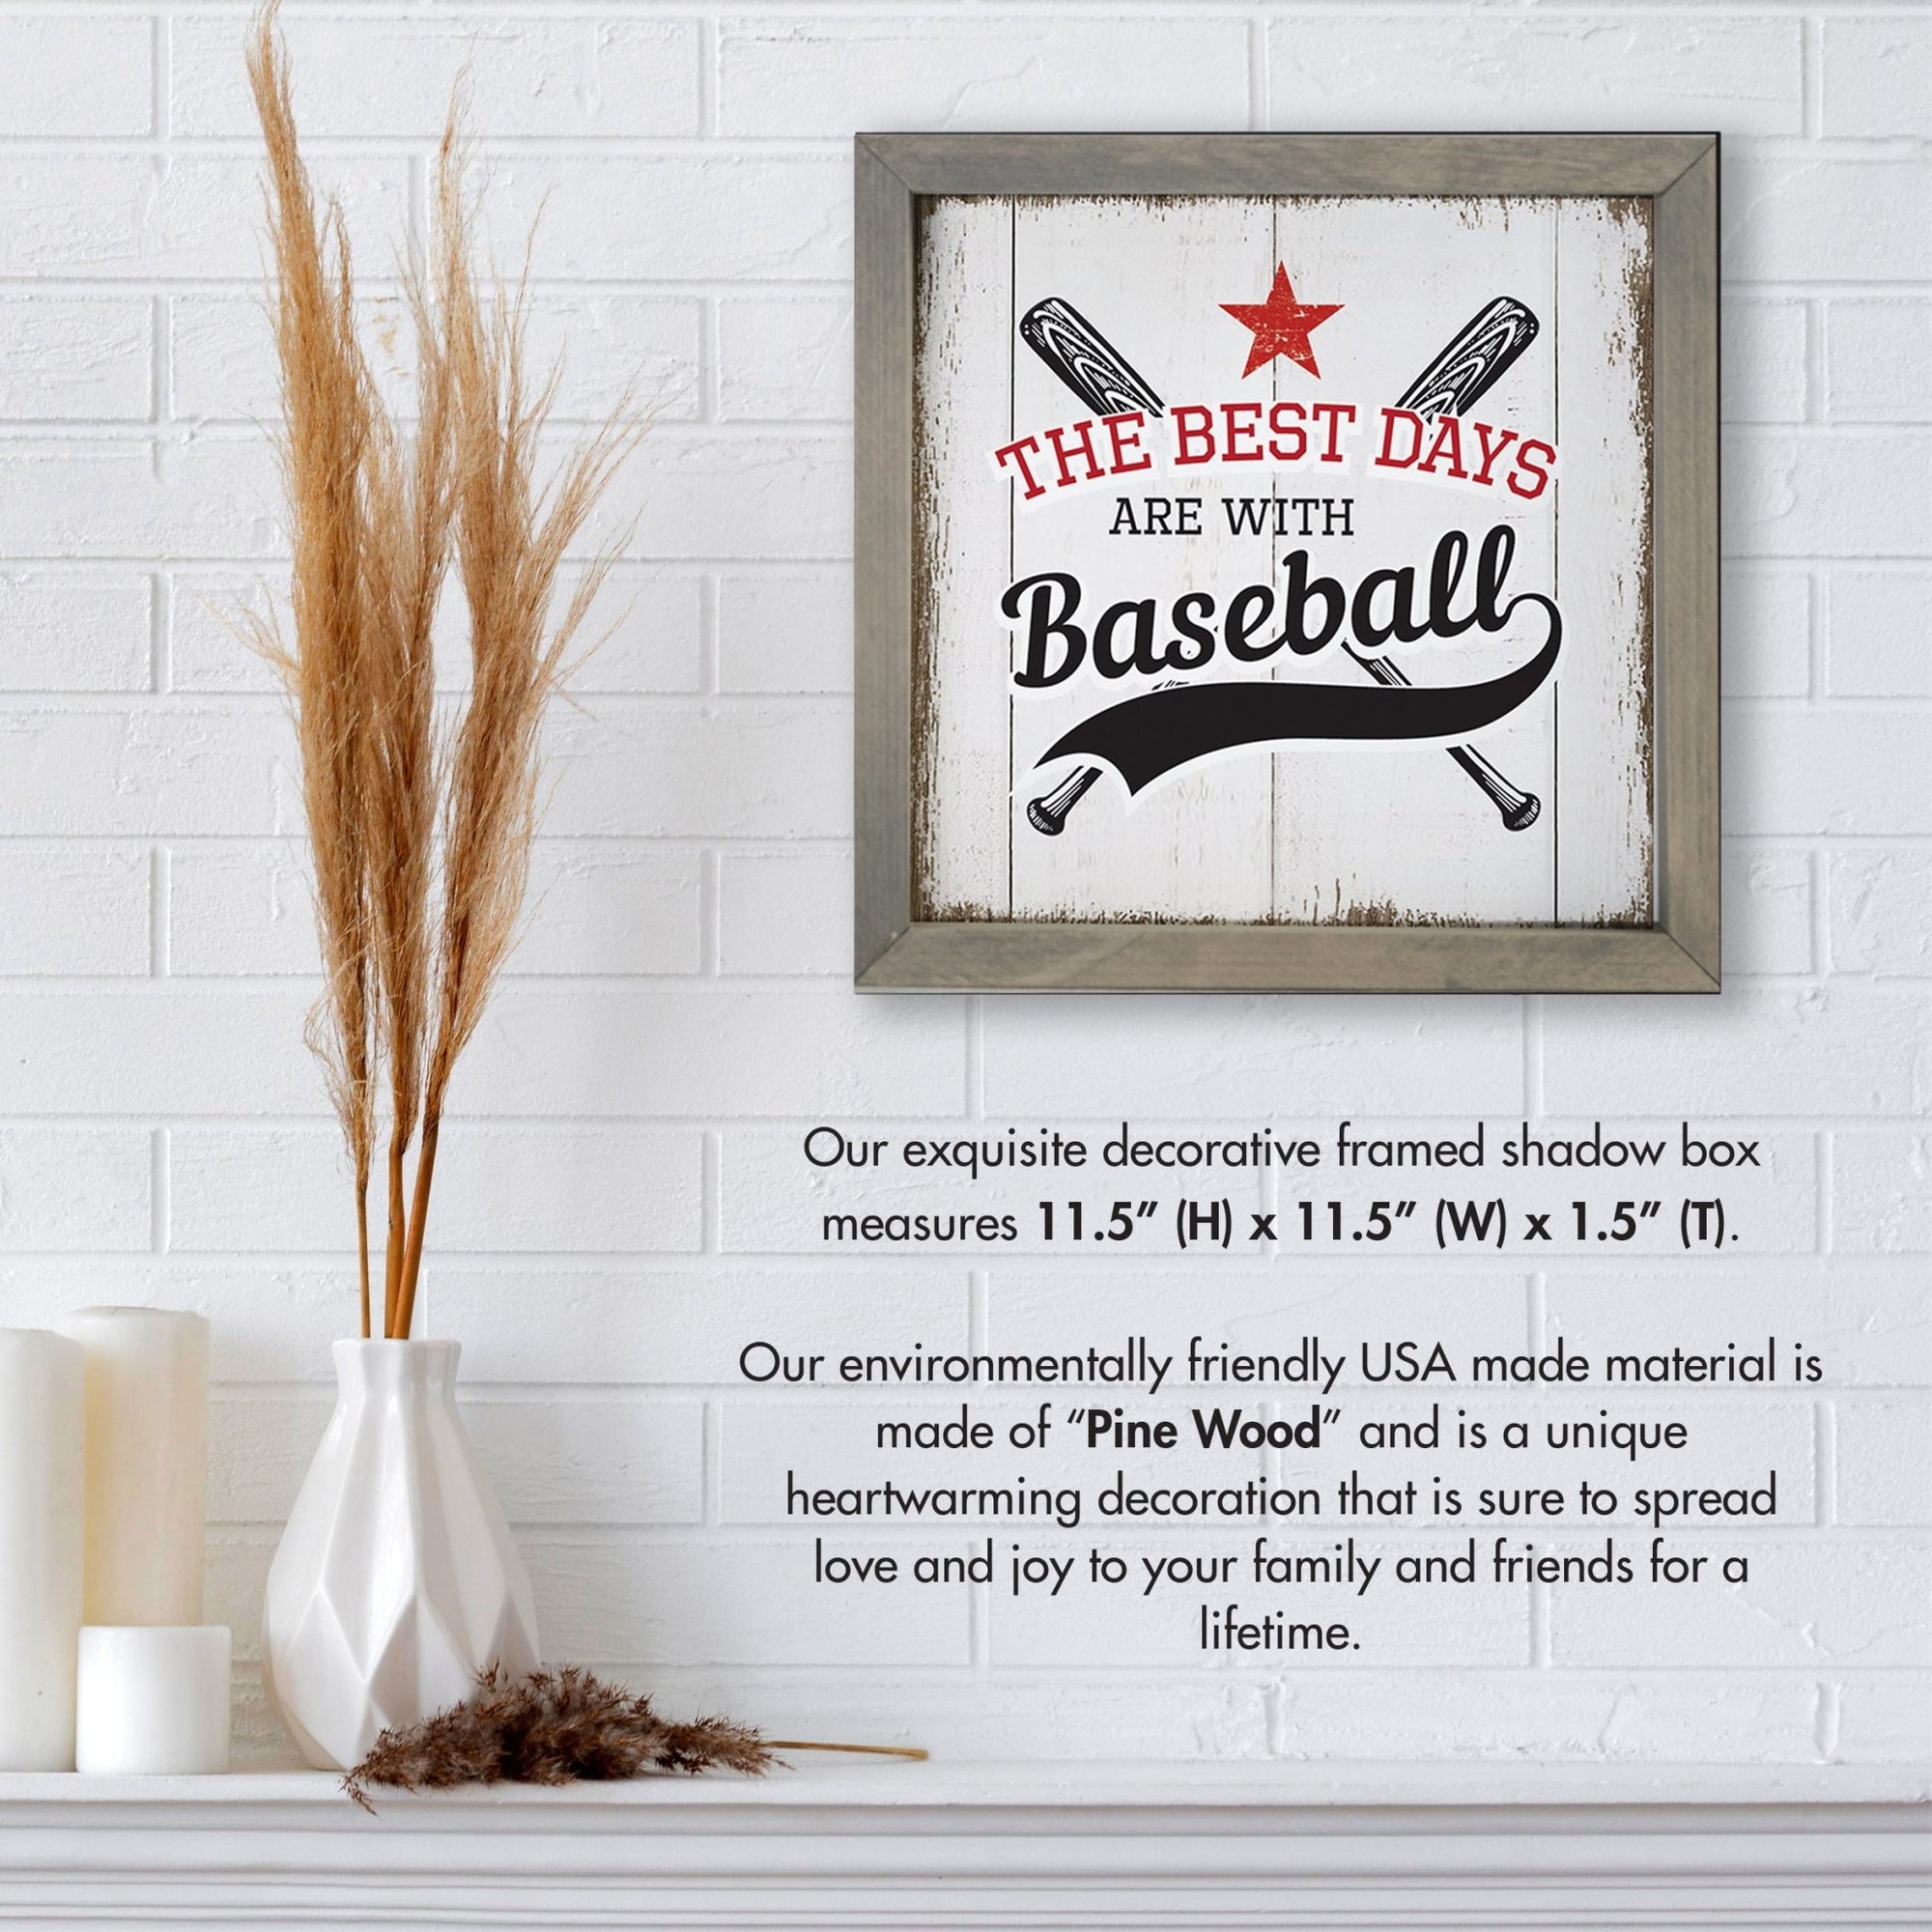 Elegant Baseball Framed Shadow Box Shelf Décor With Inspiring Bible Verses - The Best Days - LifeSong Milestones